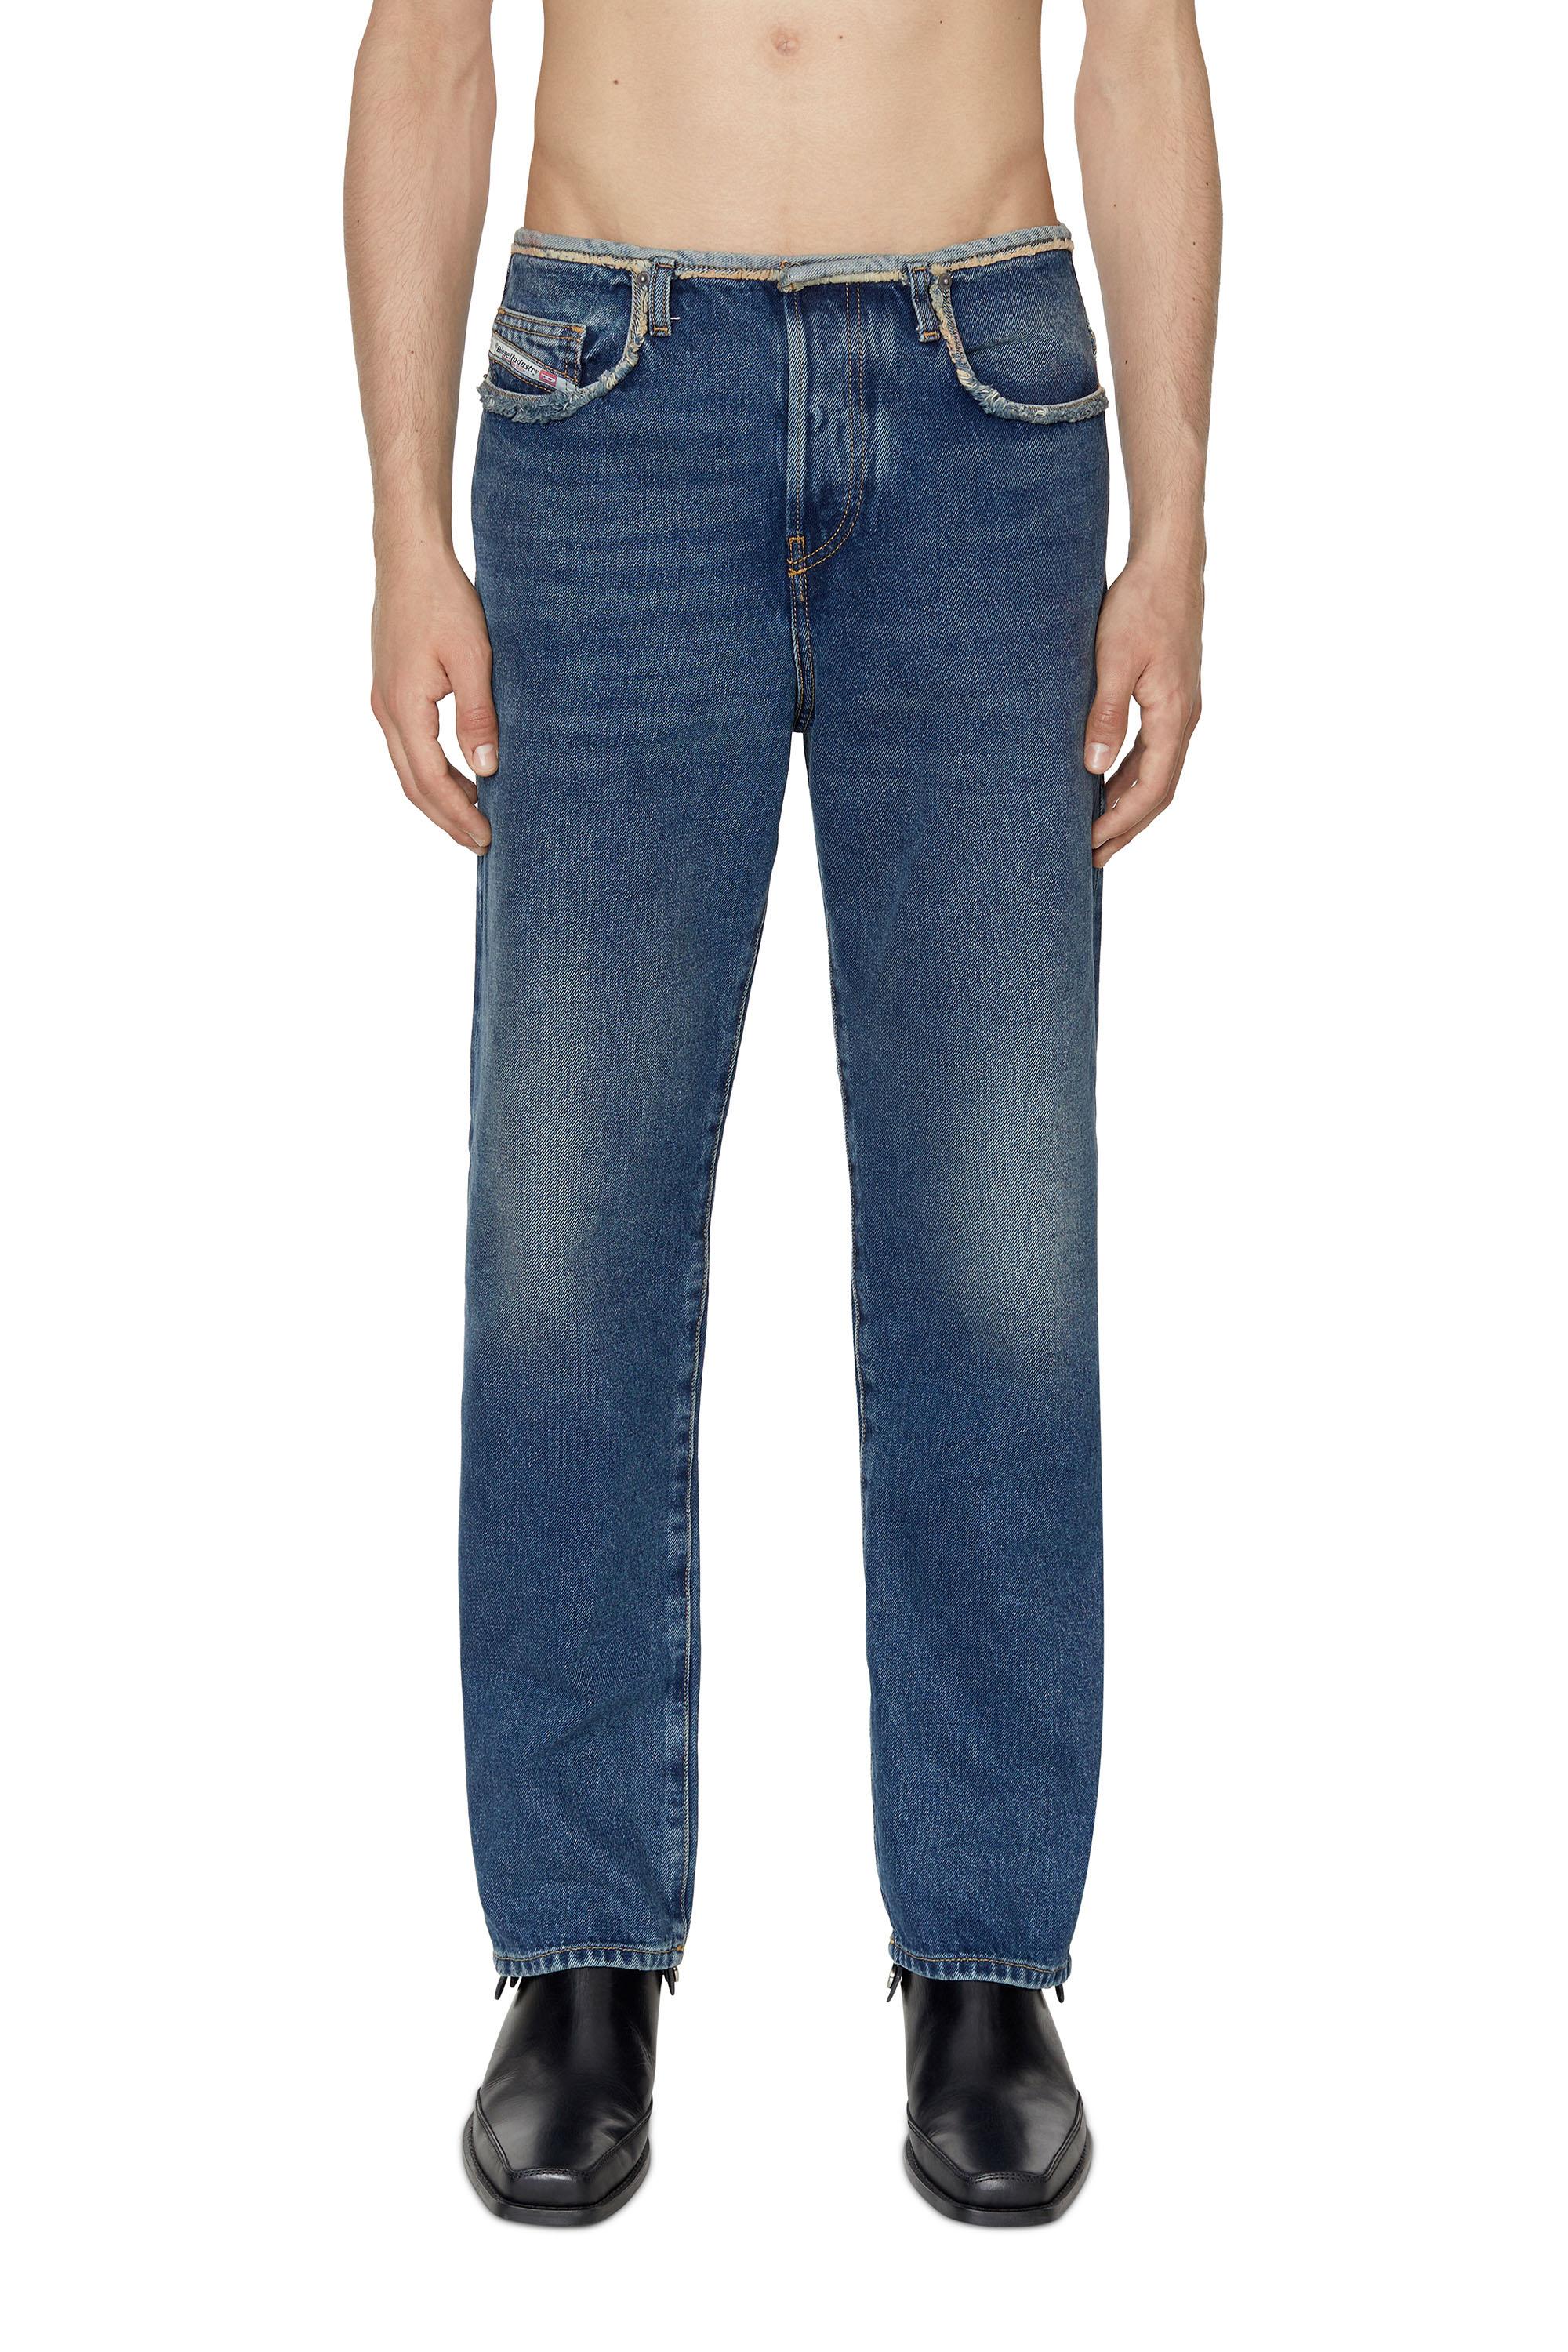 D-Pend 007F2 Straight Jeans, Mittelblau - Jeans